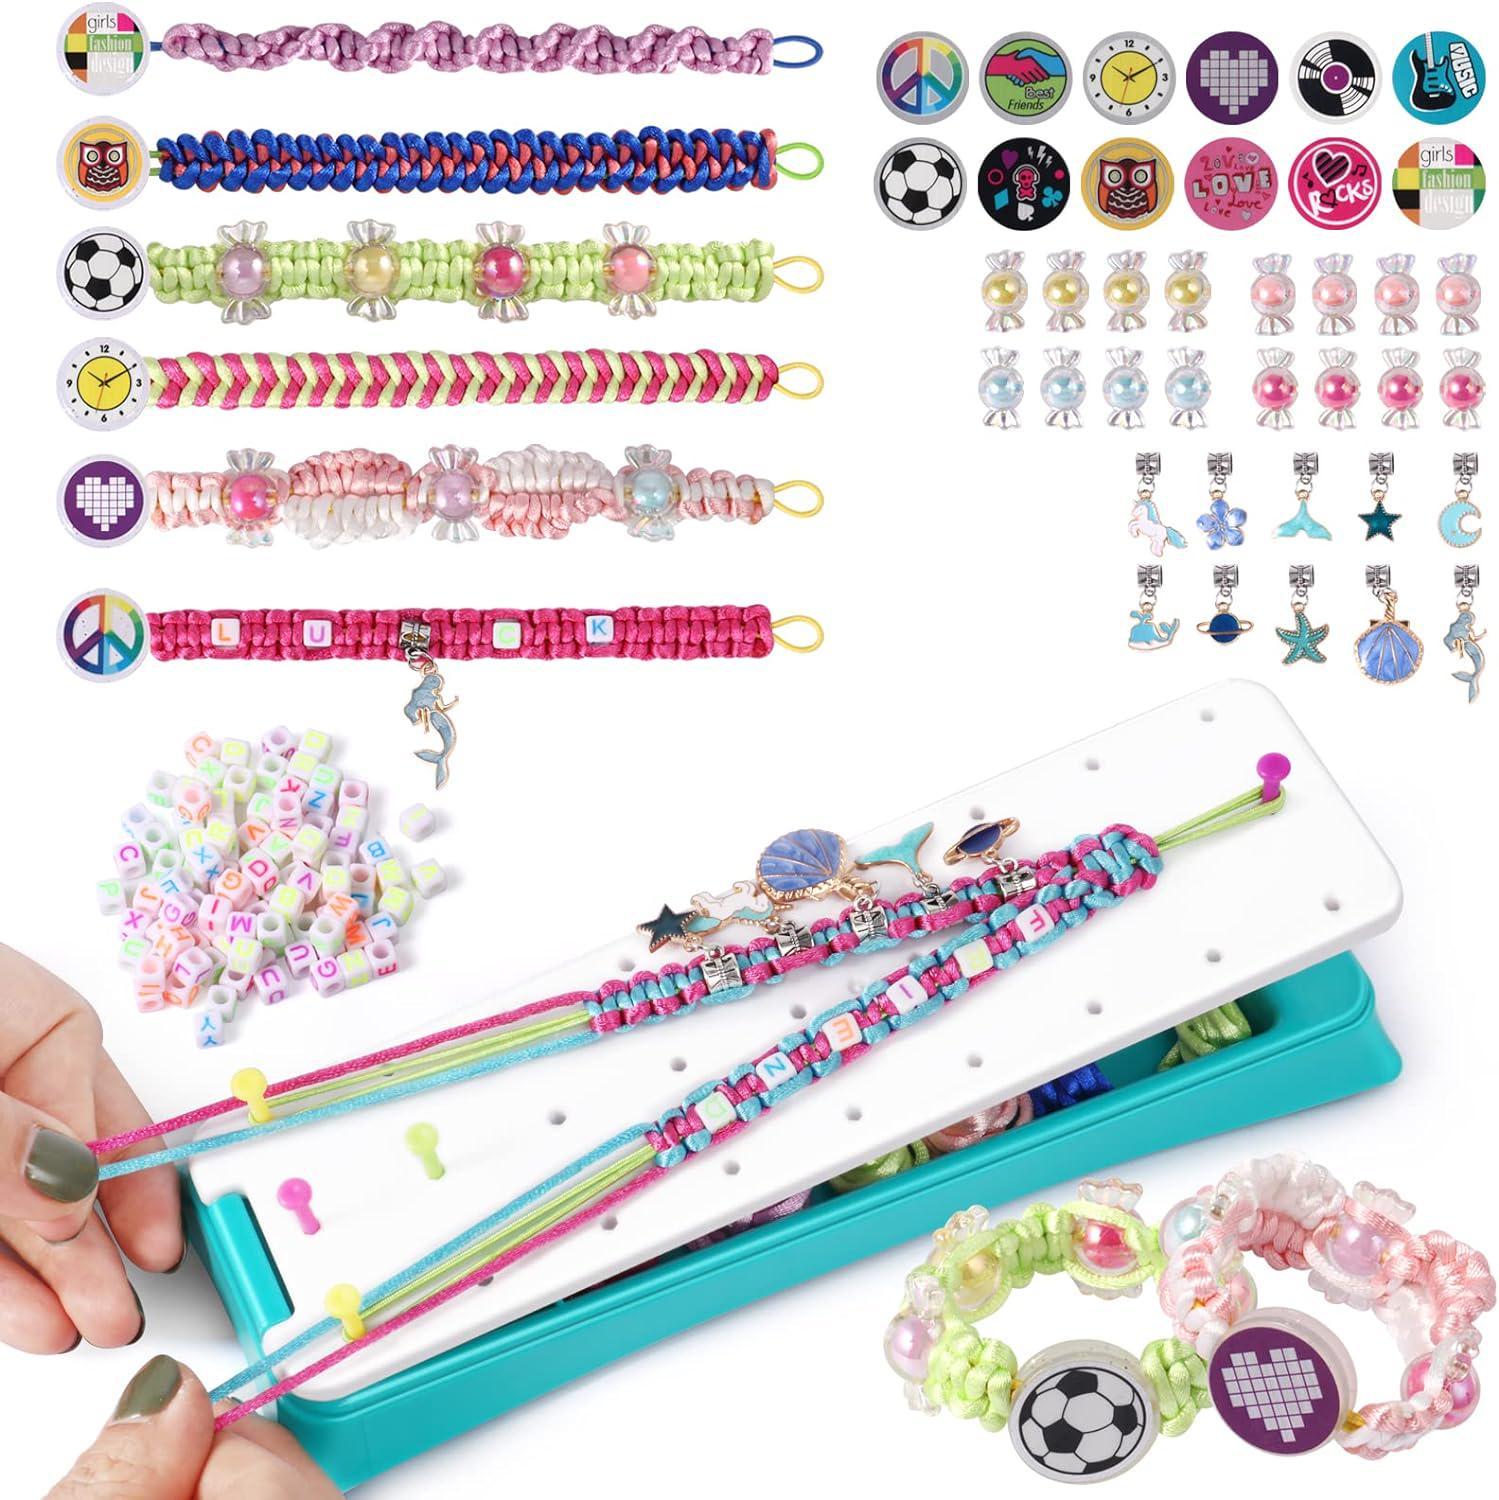 Bracelet Making Kit, 144 Pcs Bracelet Making Kit for Girls Kids Age 6 7 8 9  10 11 12 Years Old, Crafts for Girls Ages 